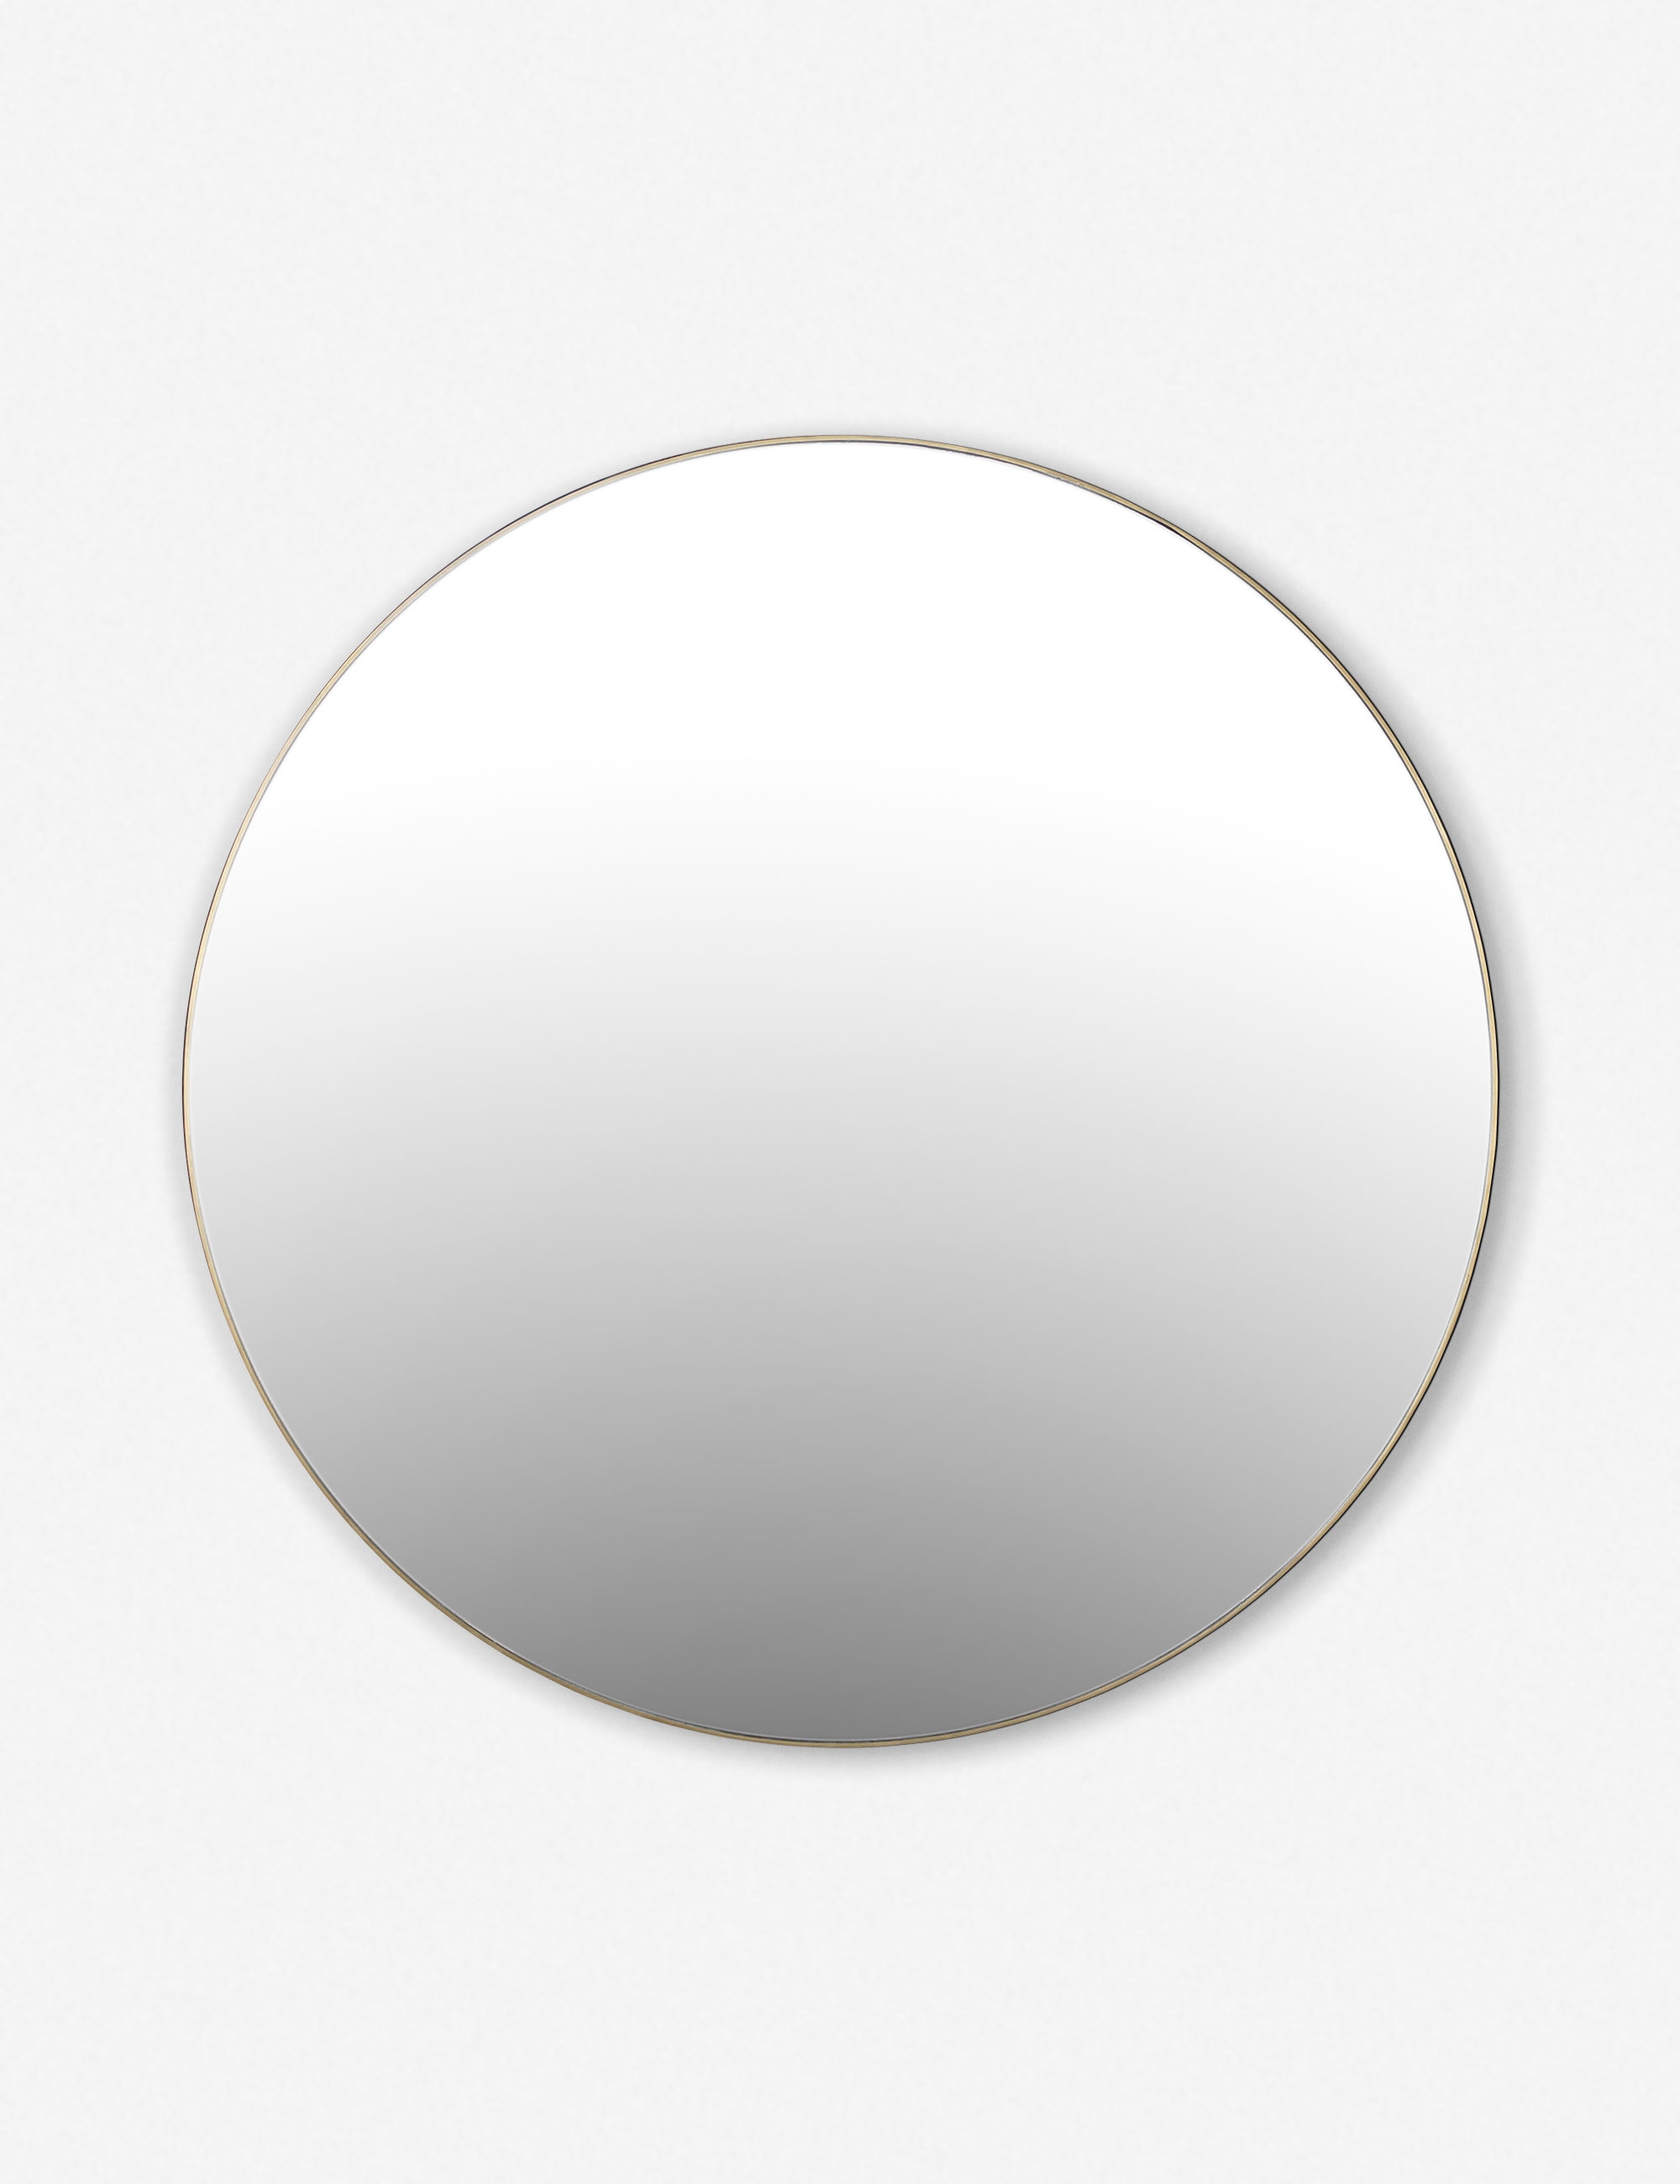 Saba Round Mirror - Image 0